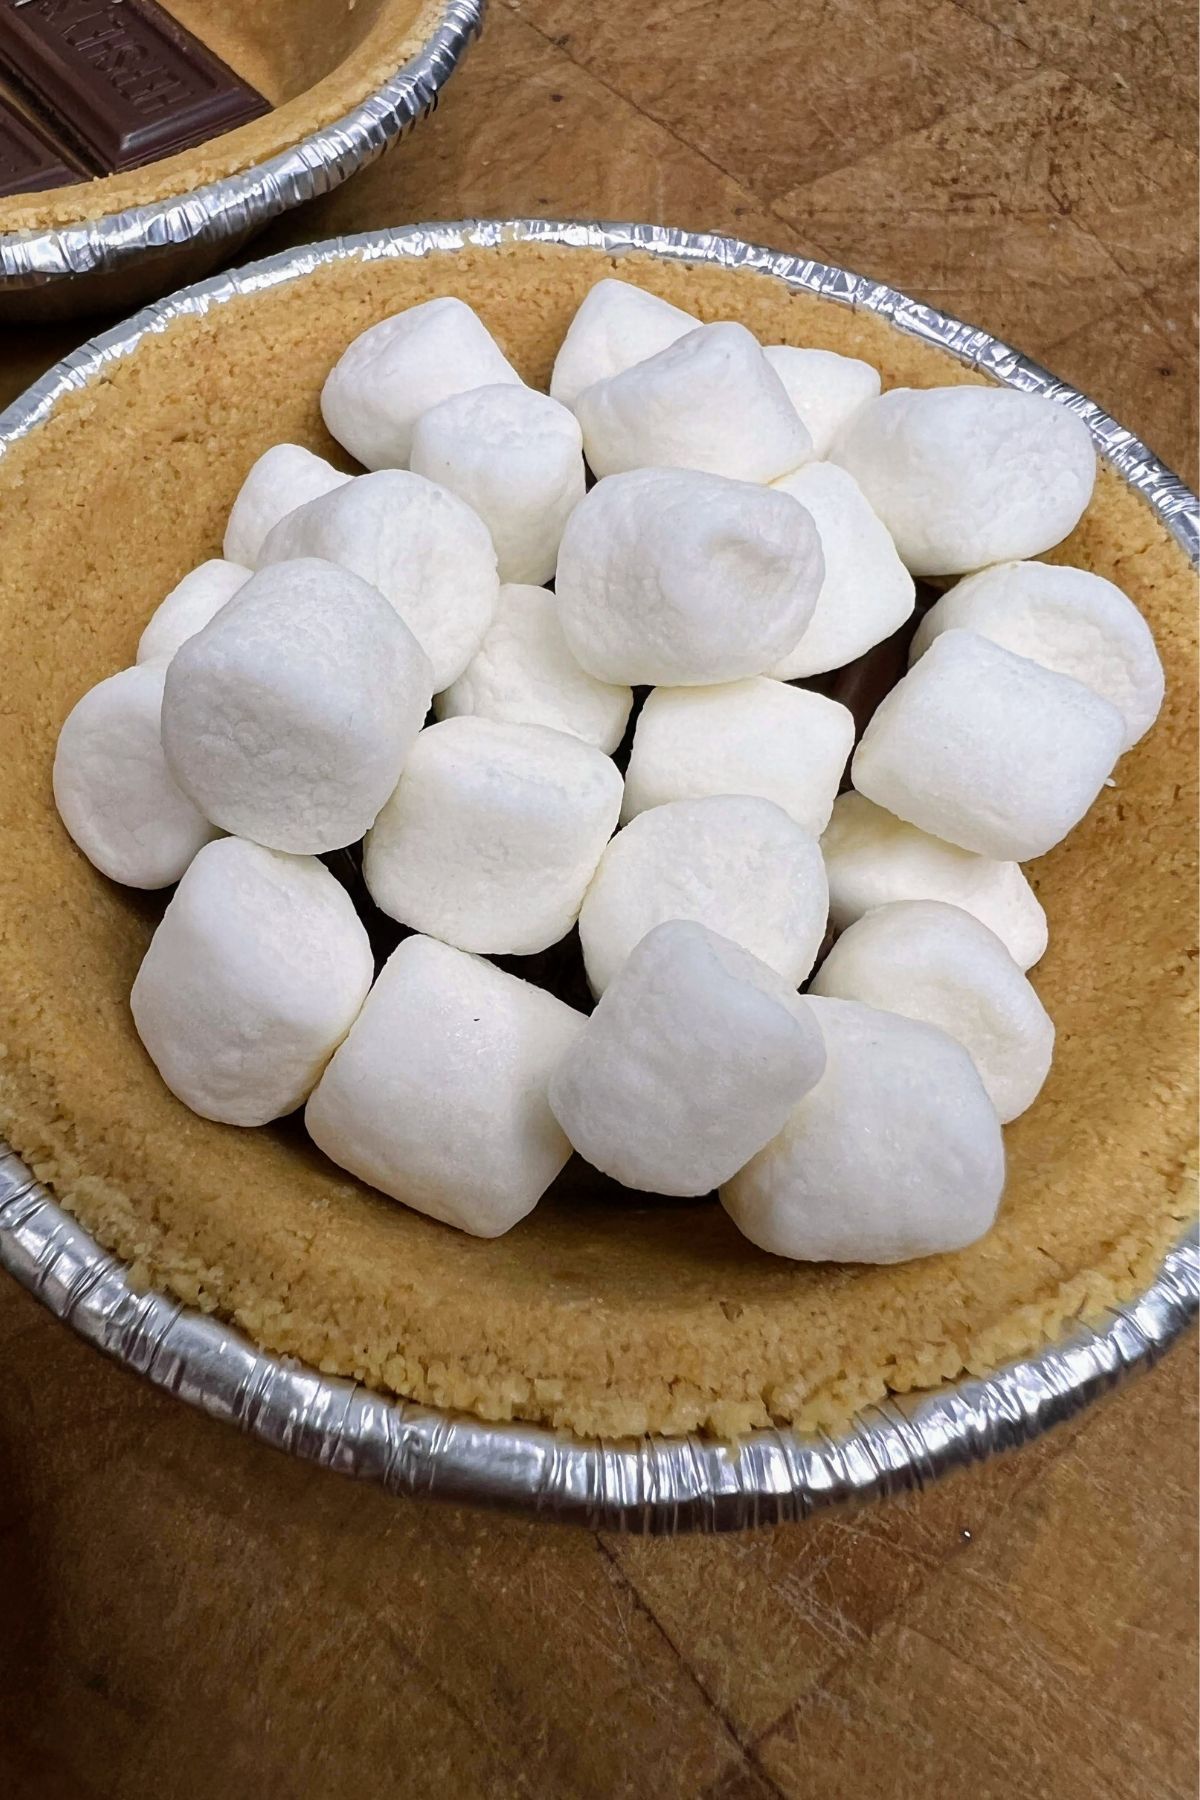 Mini marshmallows in a graham cracker crust.